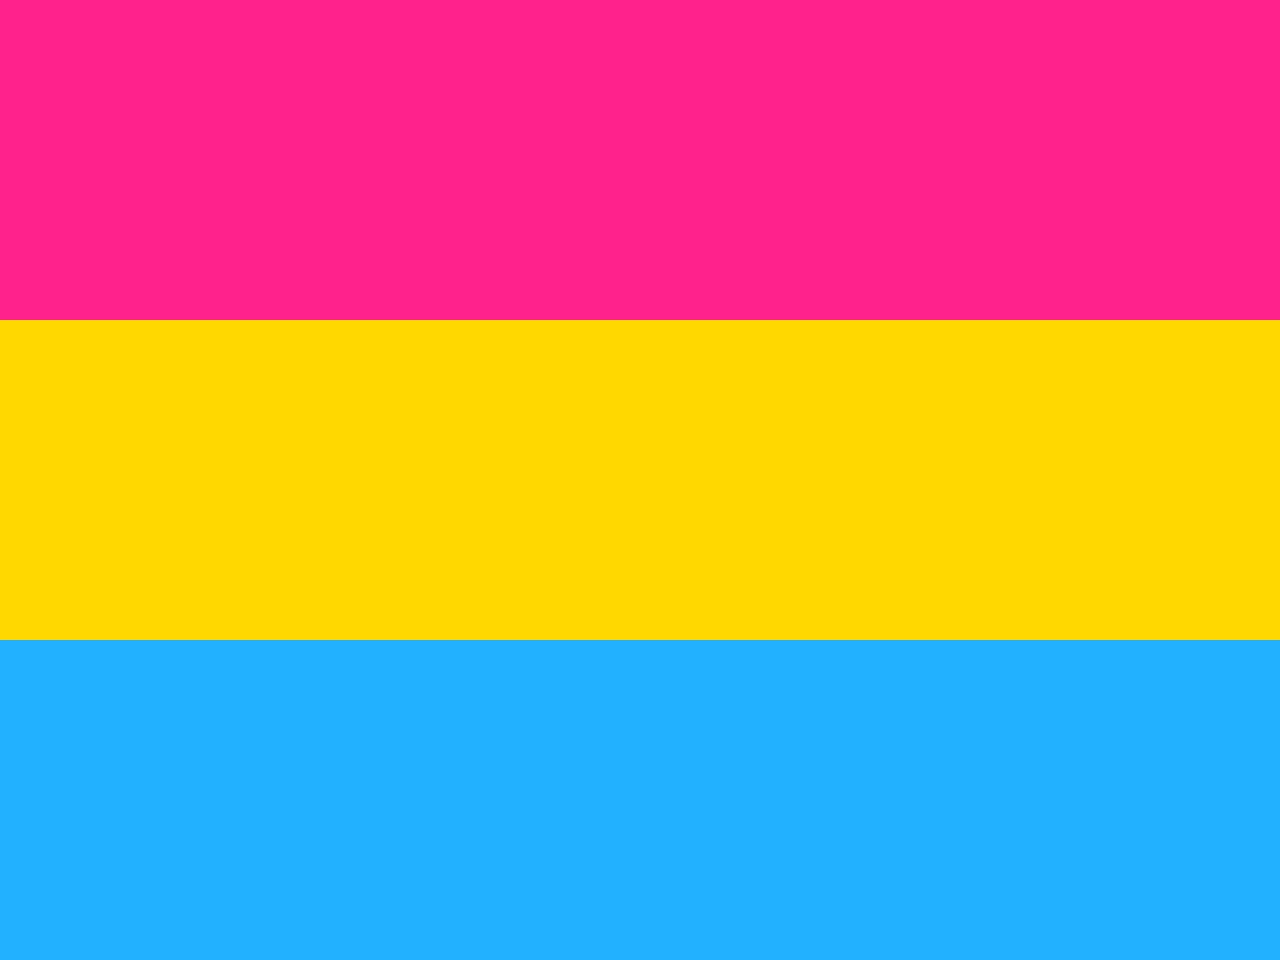 pansexuality_flag.jpg